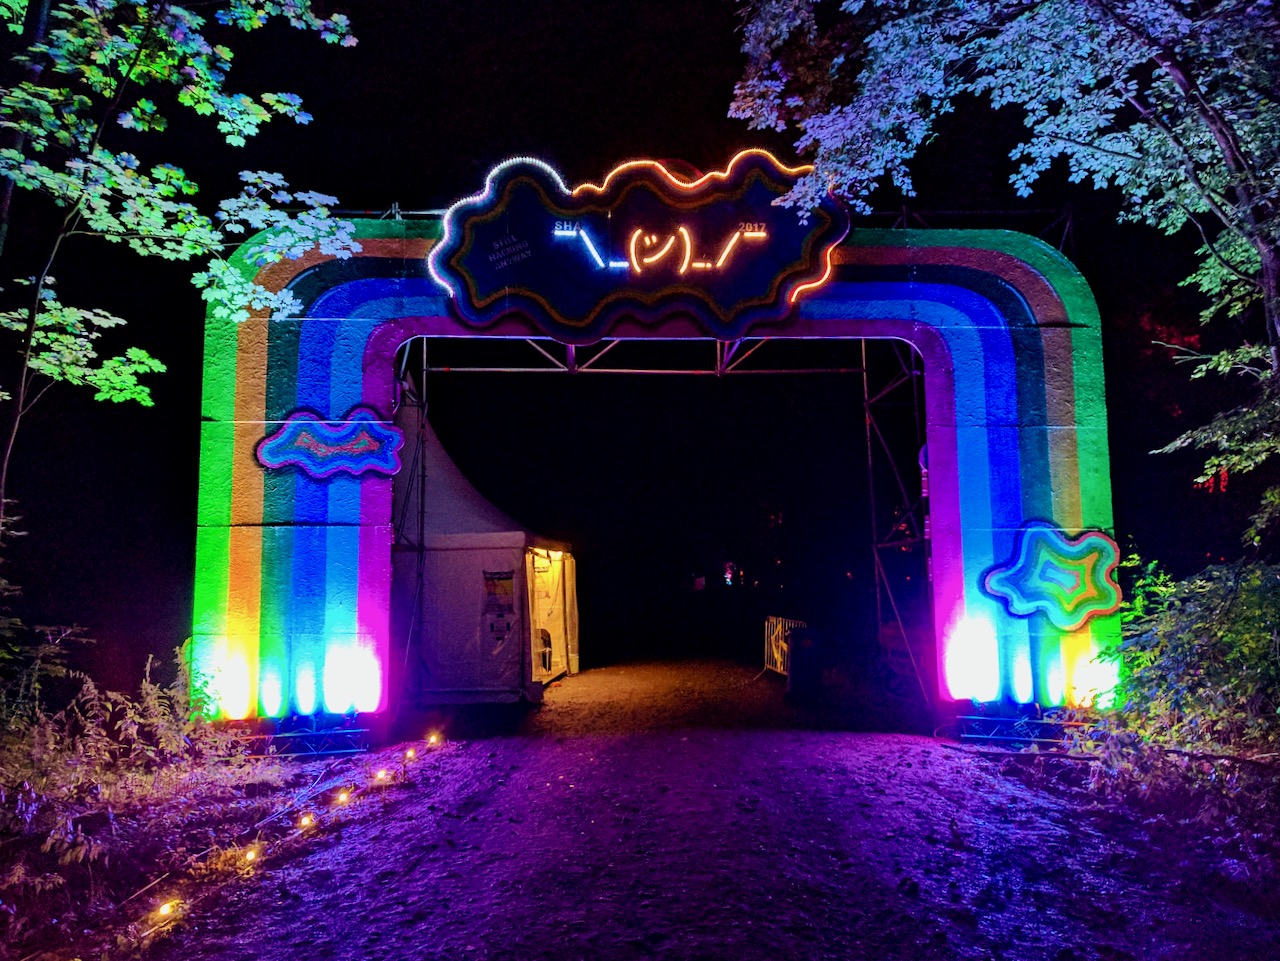 The entrance gate of SHA2017, the event preceding MCH2022